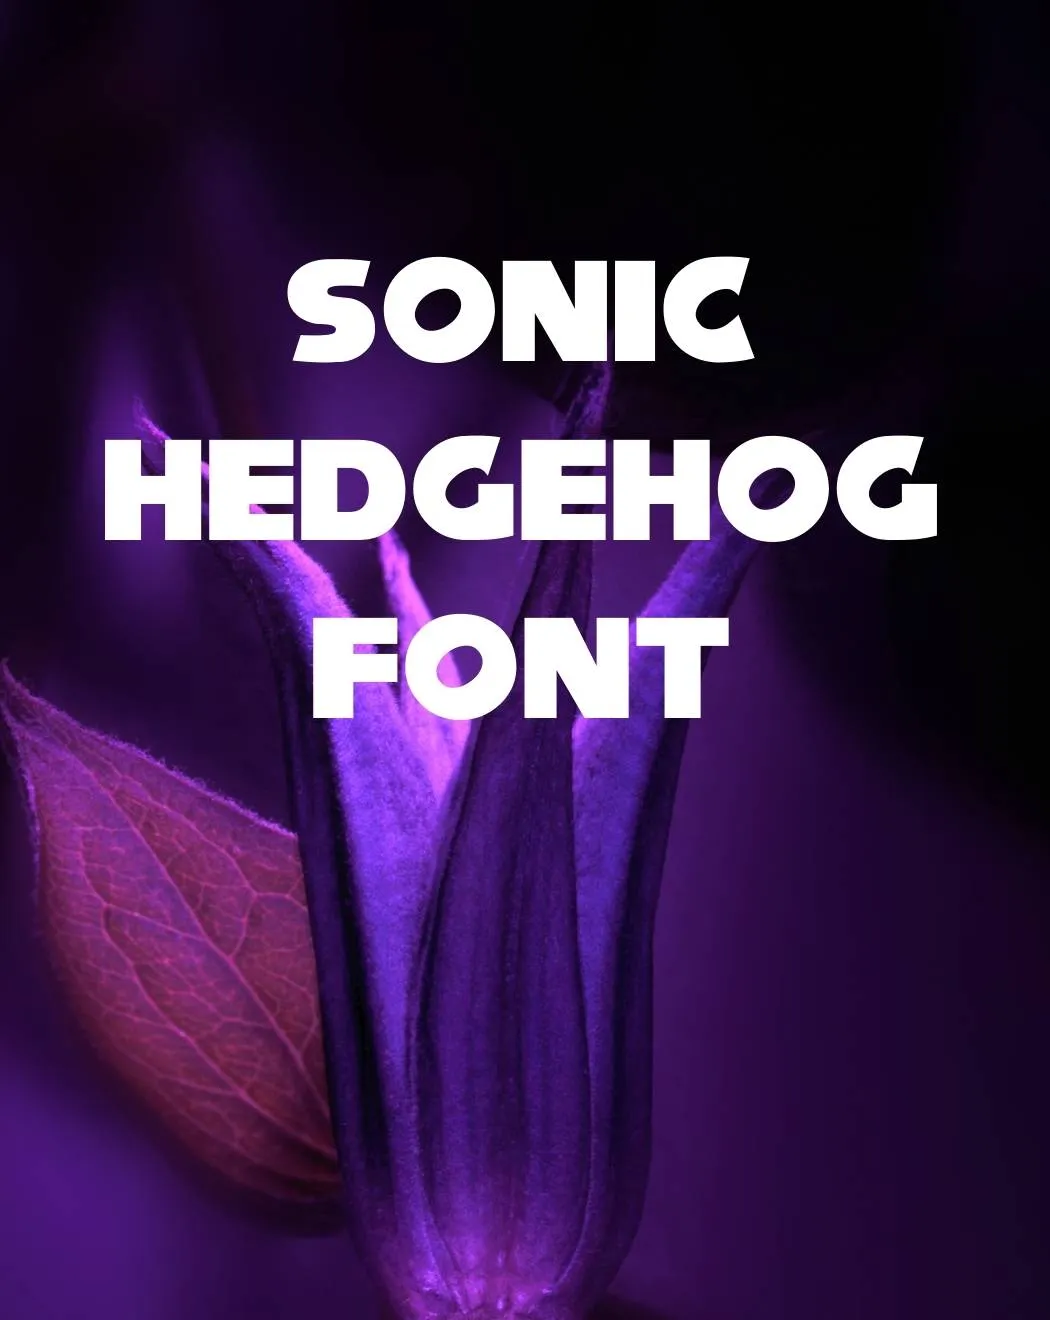 Sonic Hedgehog Font Free download